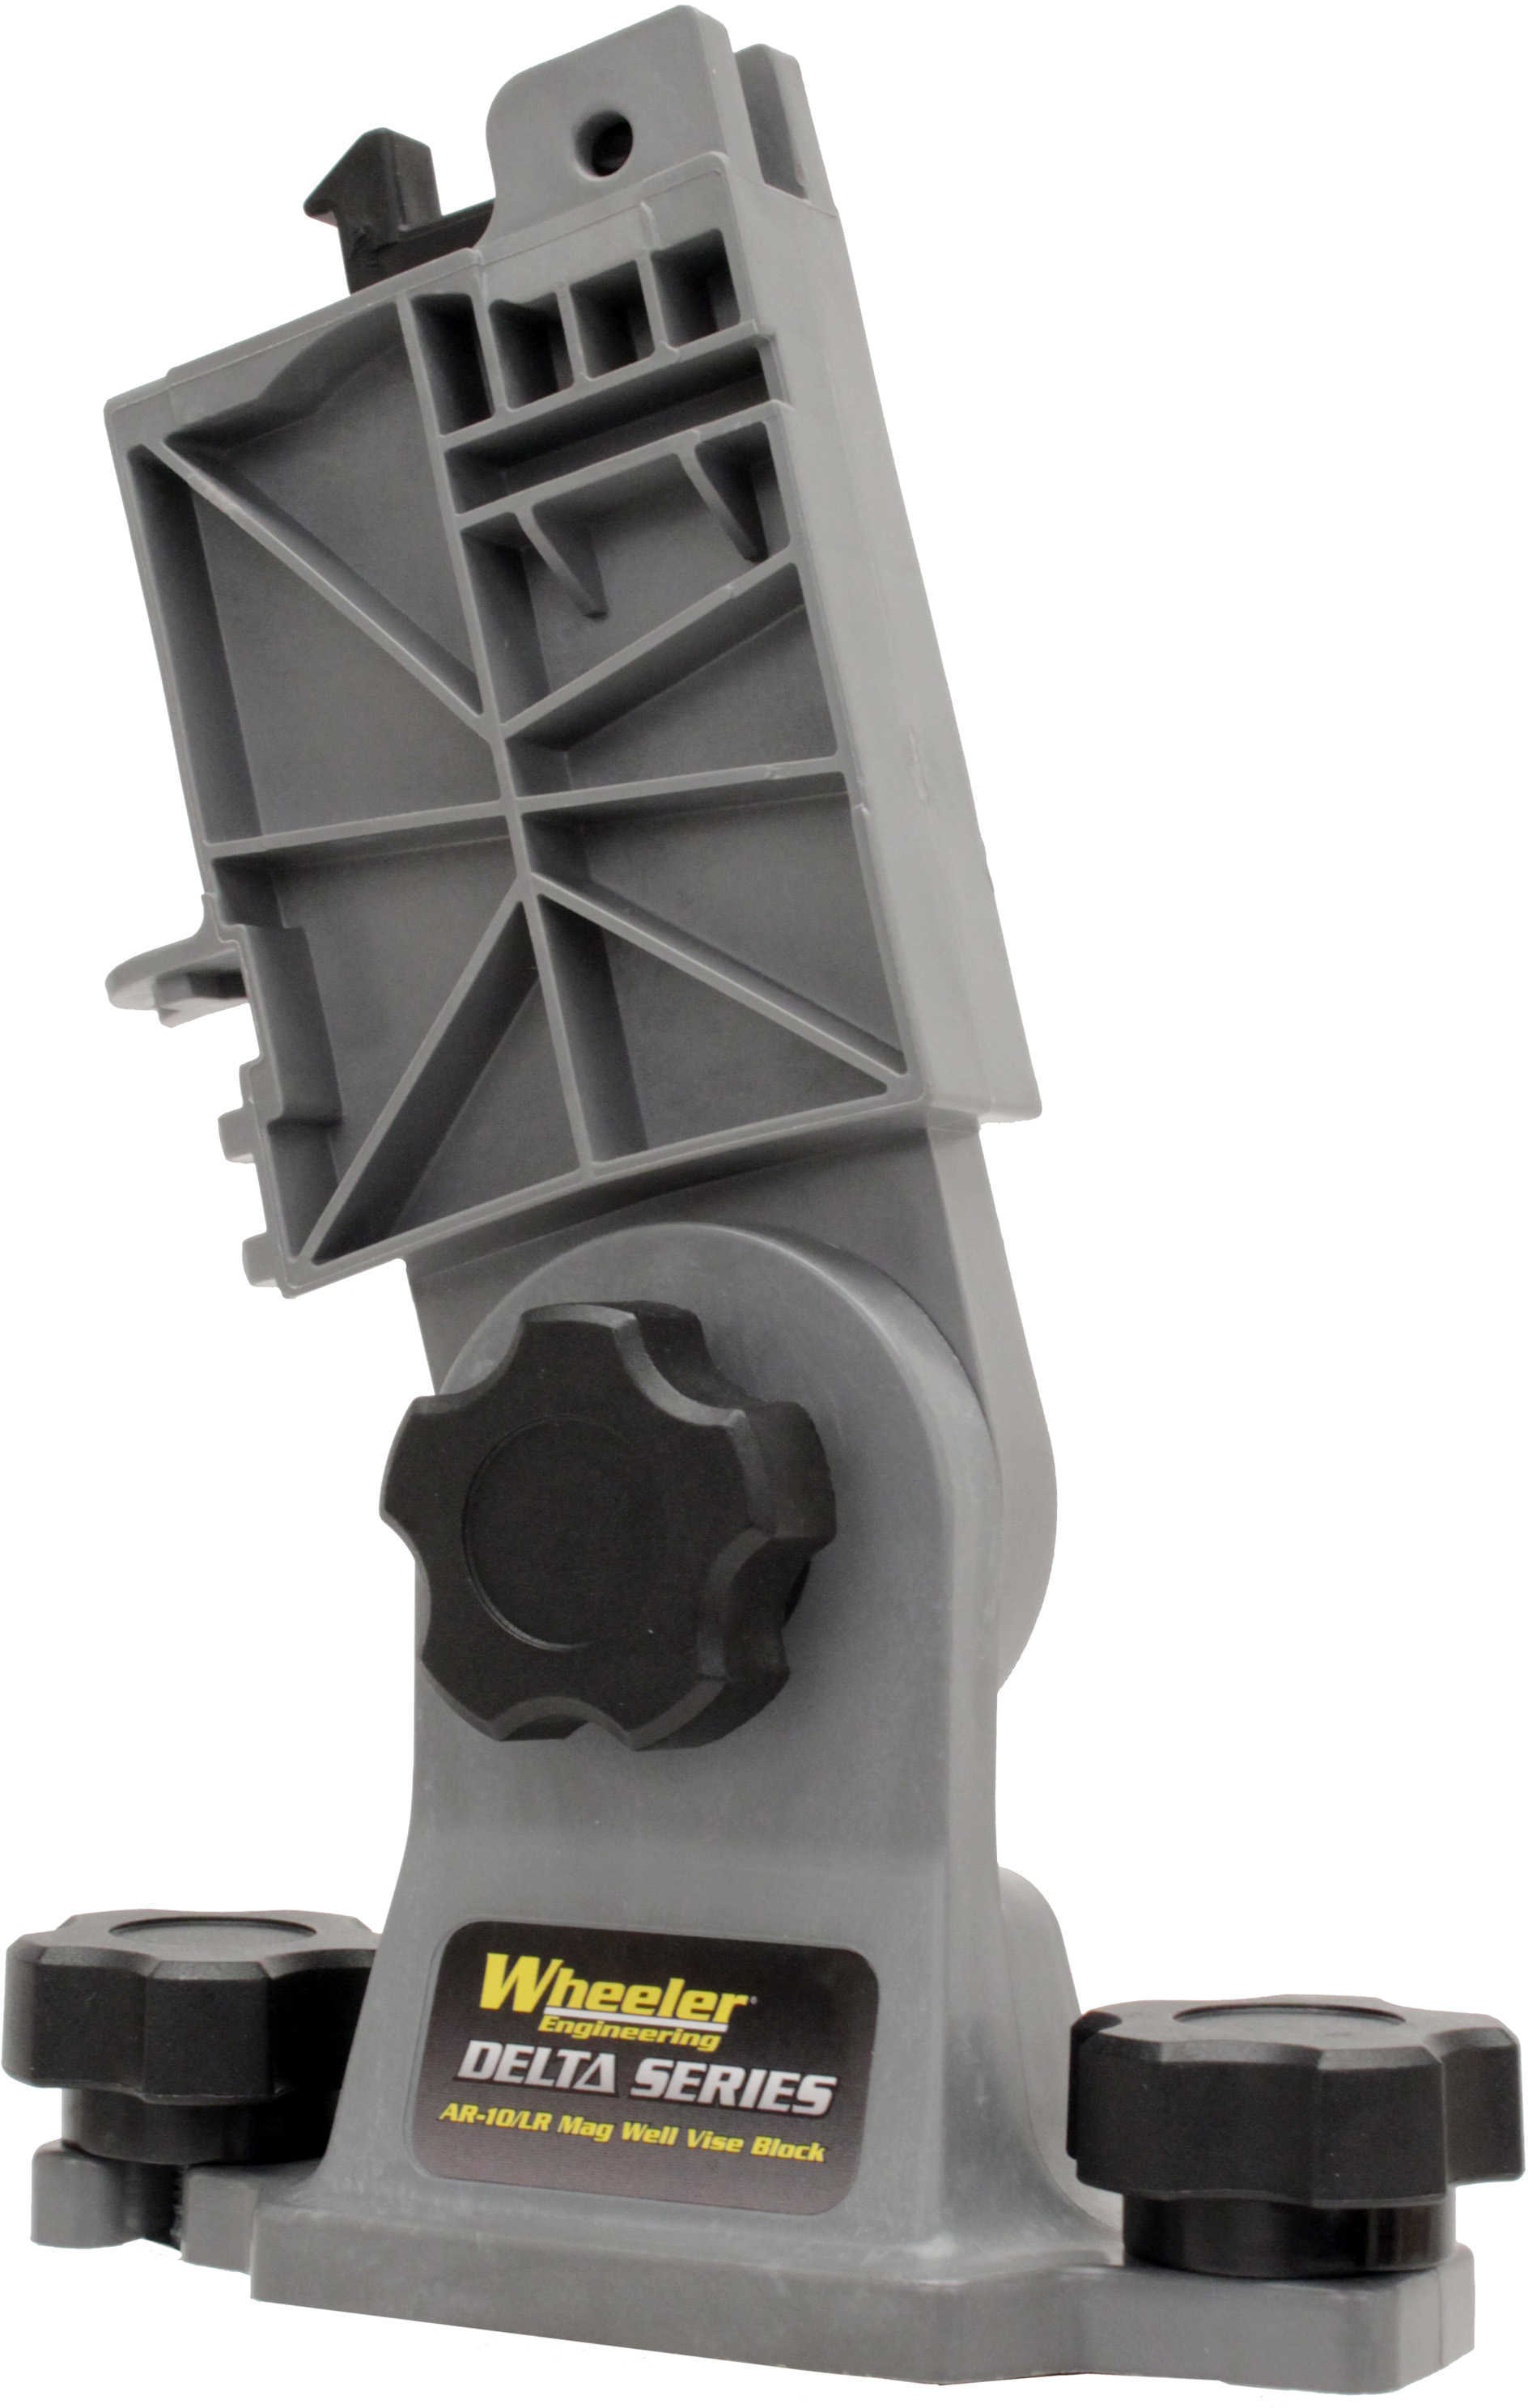 Wheeler Delta Series AR-10 Mag Well Vise Block 146200